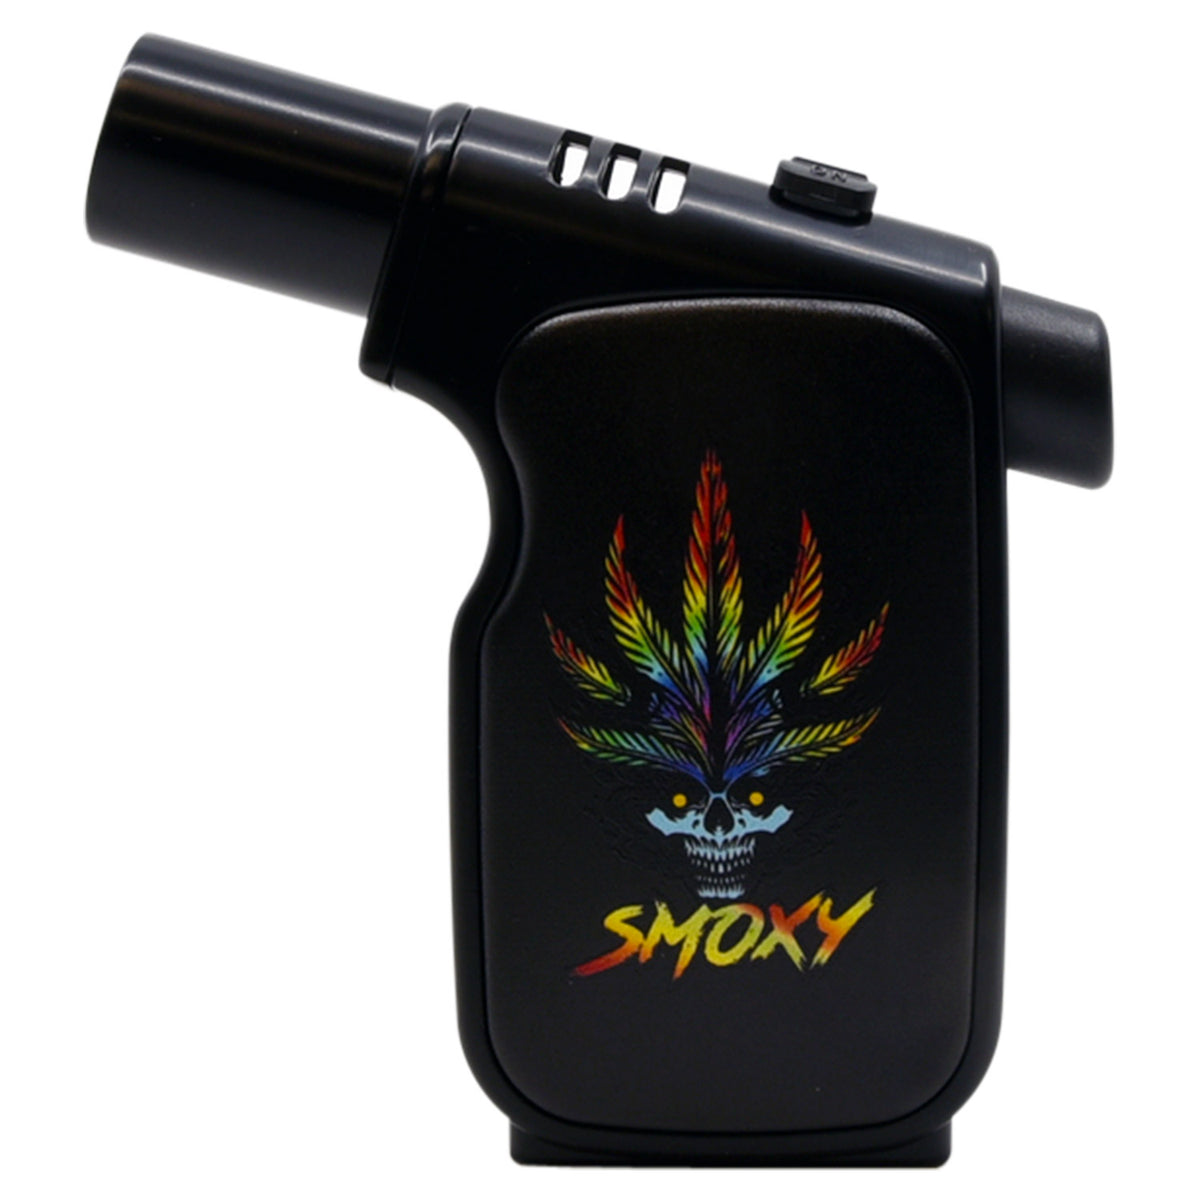 Smoxy Torch Lighter Executive Hippie